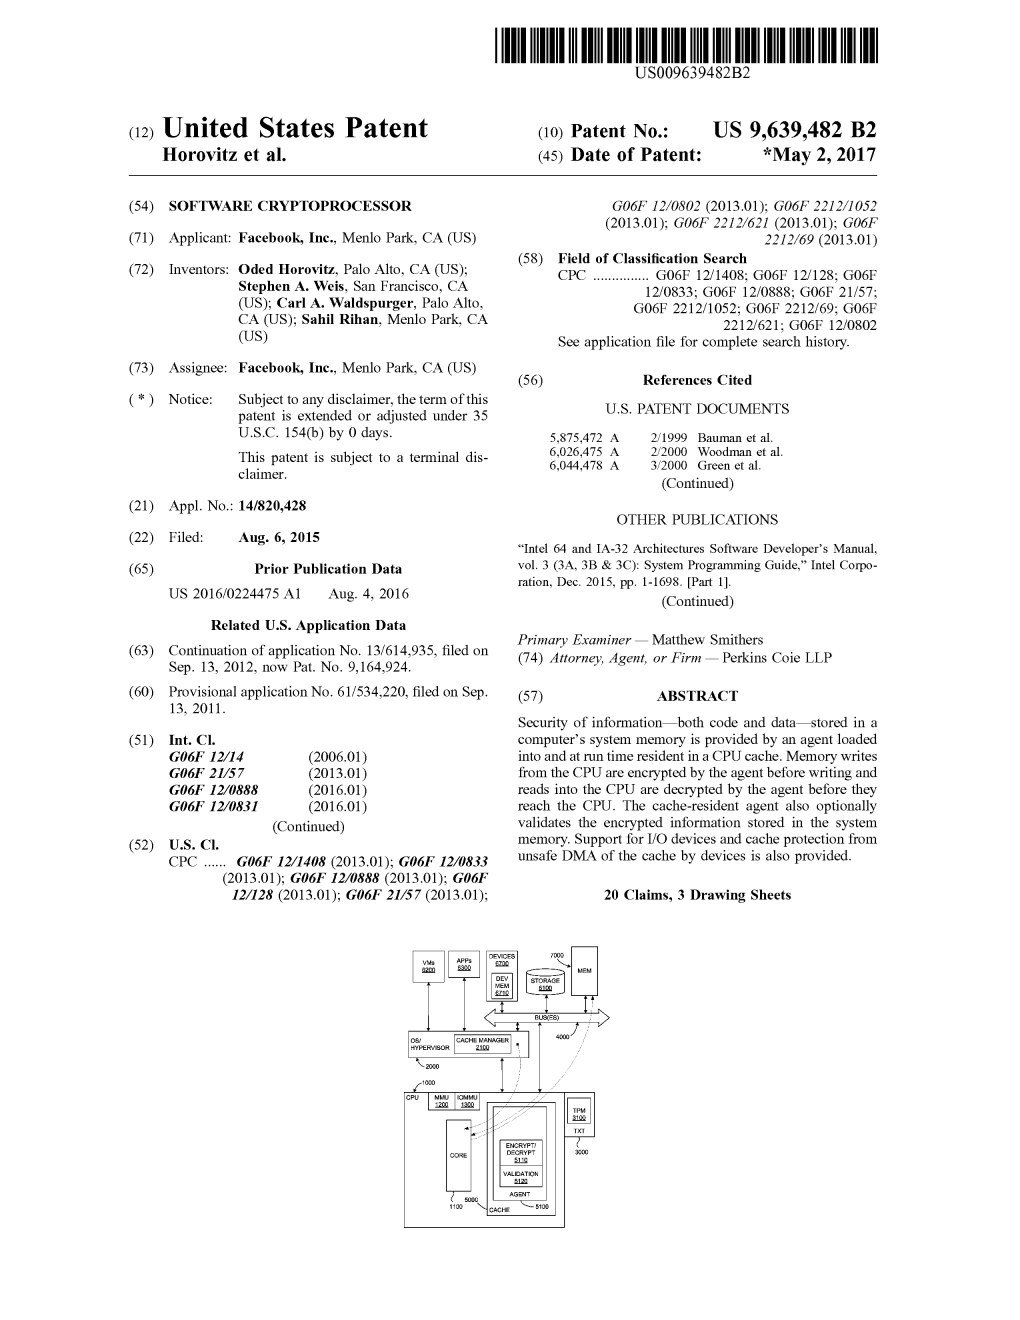 (12) United States Patent (10) Patent No.: US 9,639,482 B2 Horovitz Et Al